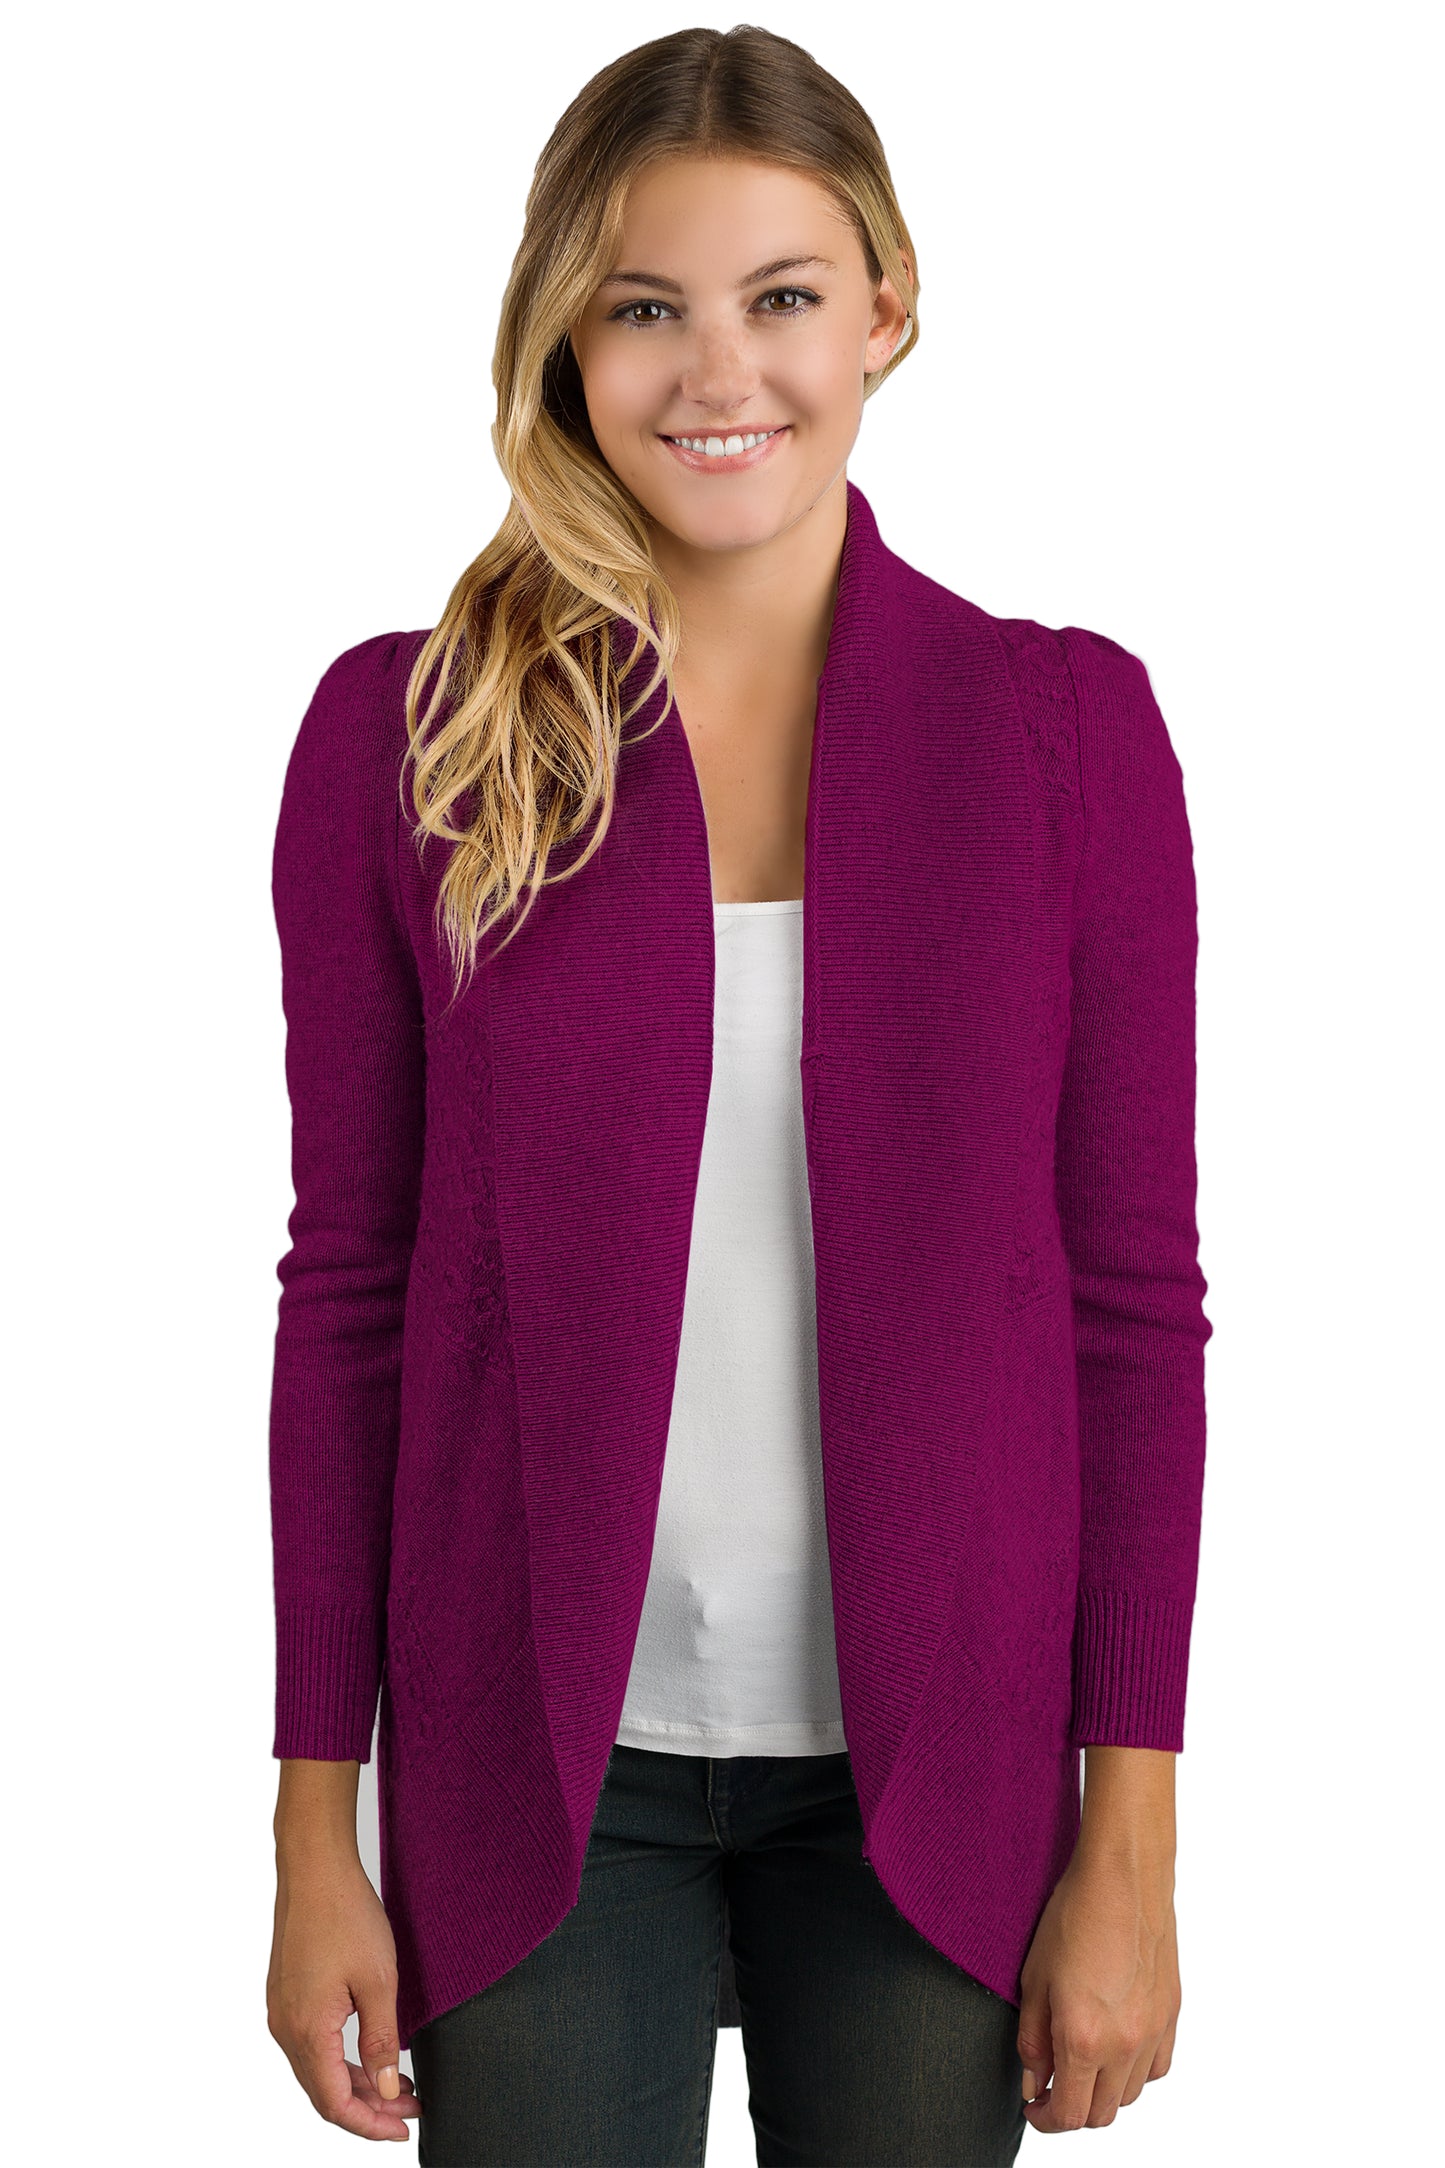 JENNIE LIU Women's 100% Pure Cashmere Long Sleeve Celine Cable-Knit Open Cardigan Sweater